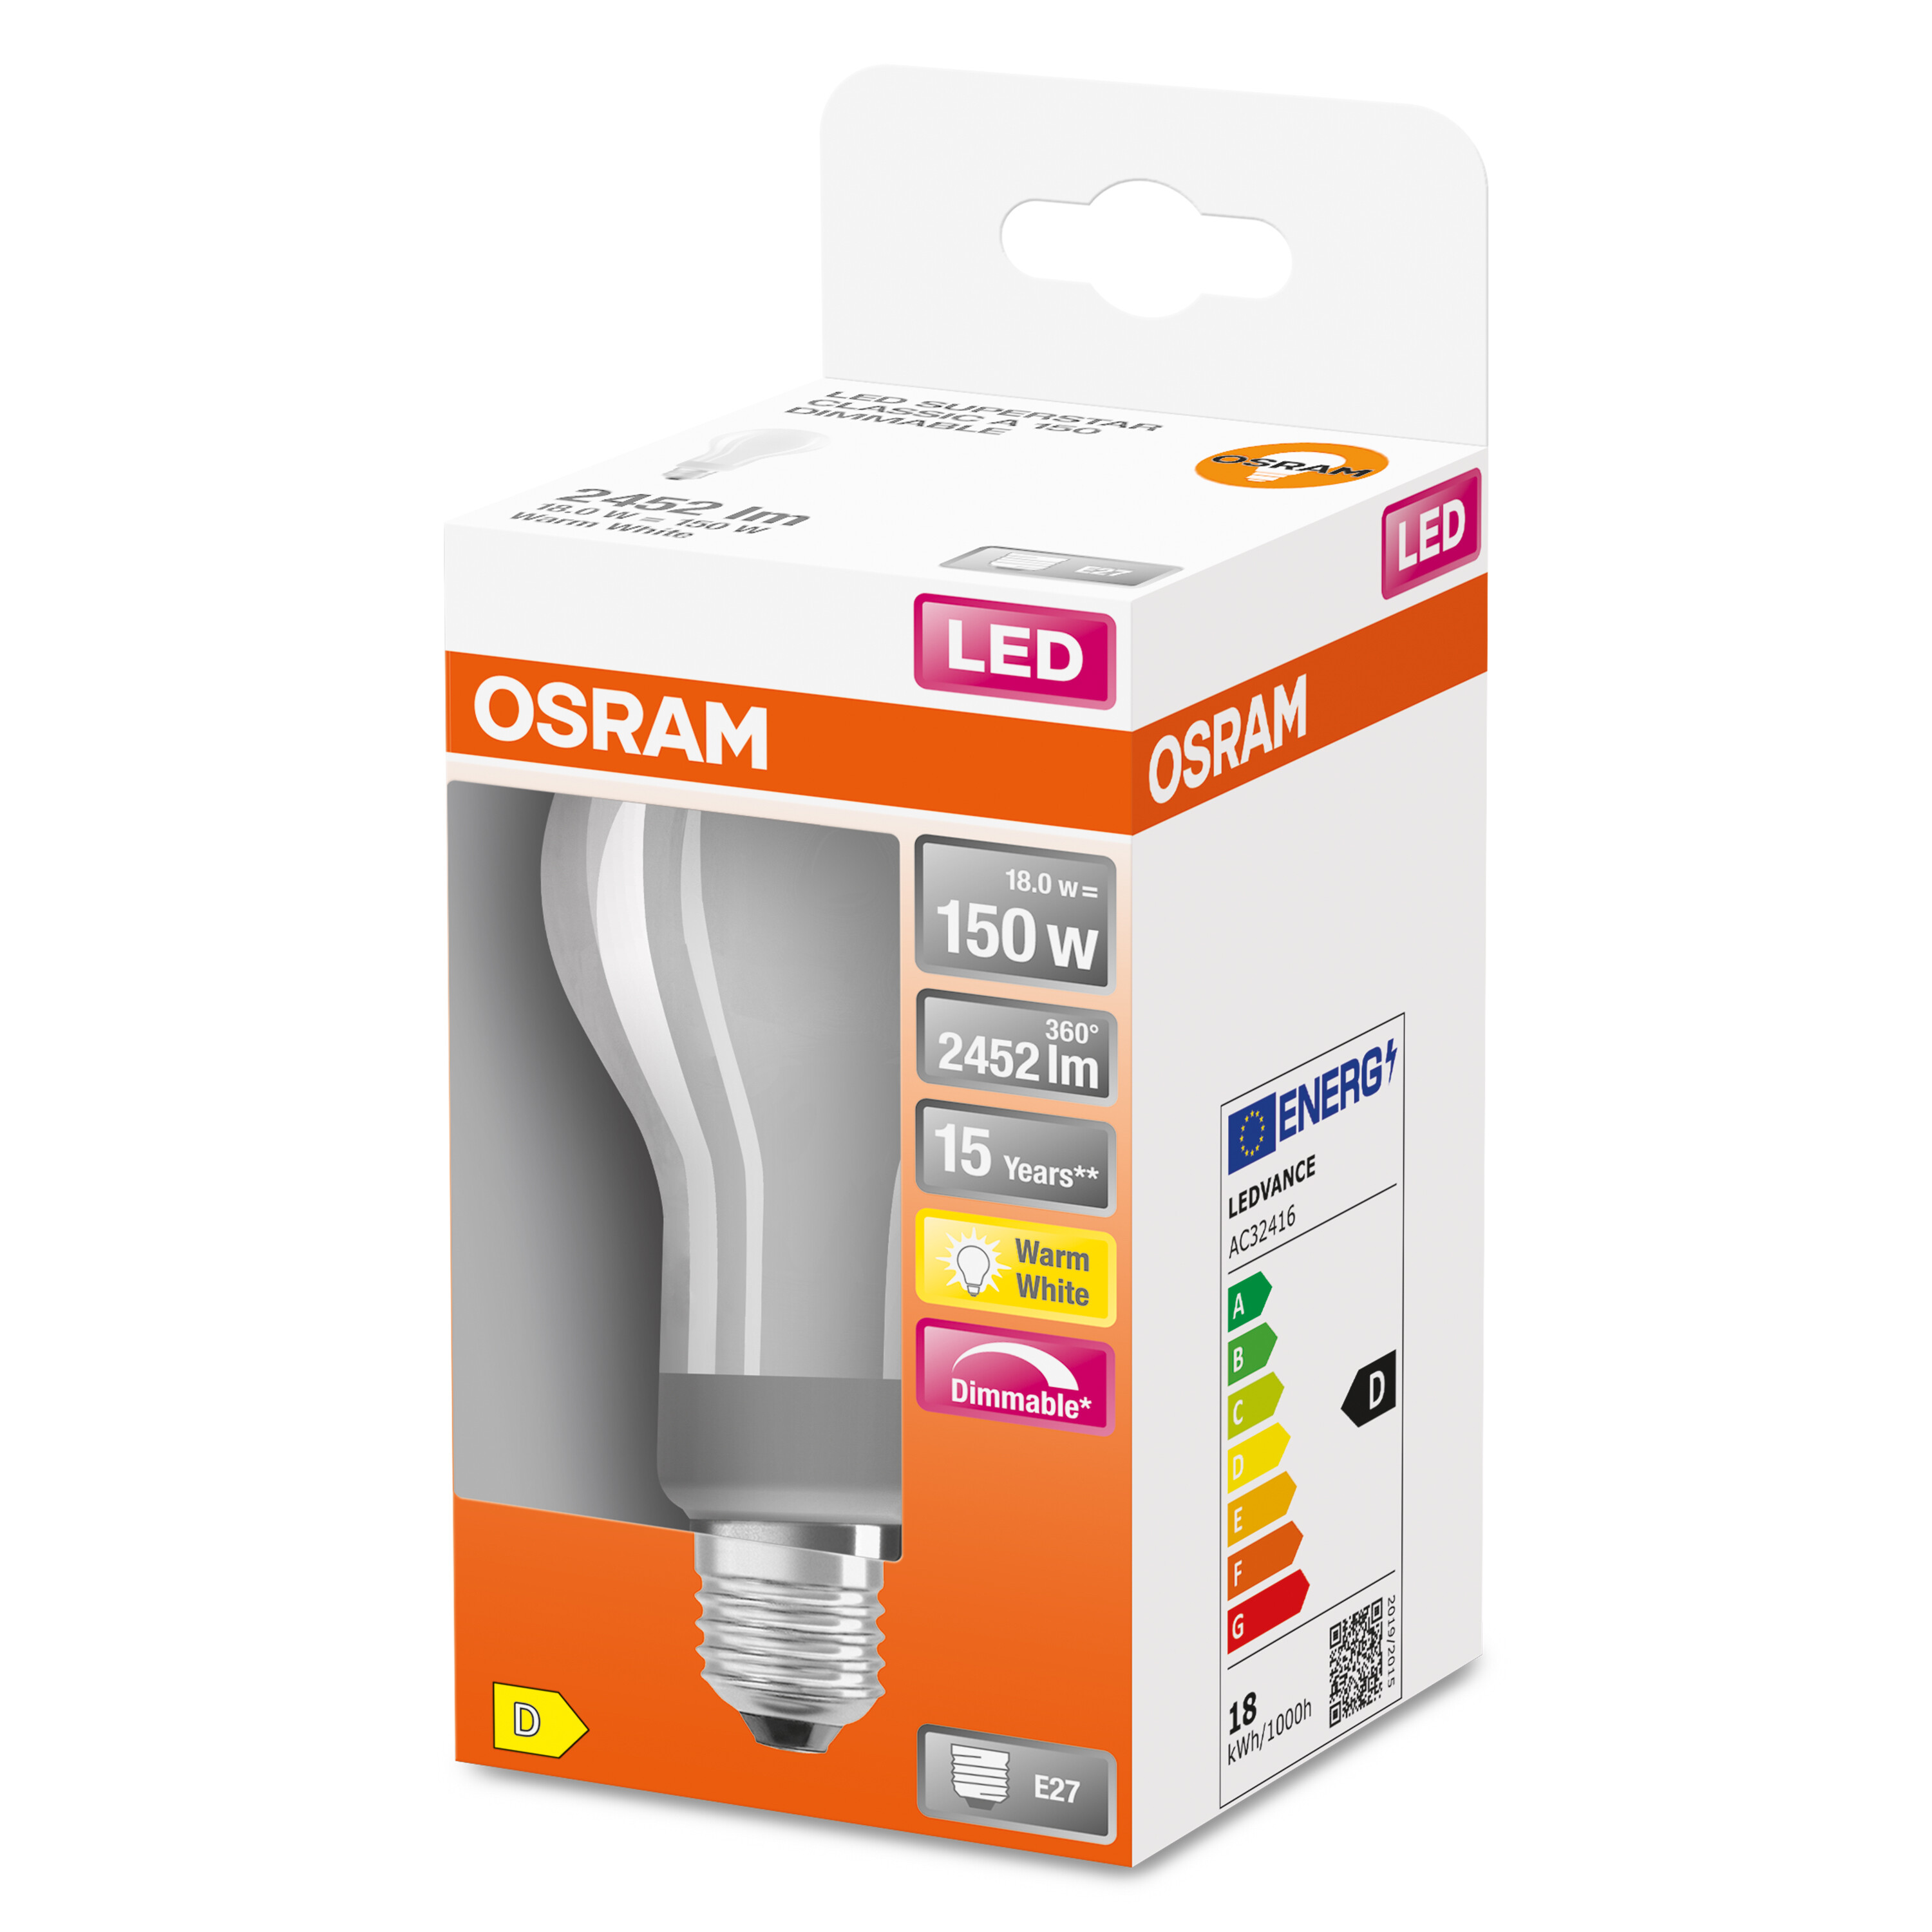 OSRAM  LED SUPERSTAR CLASSIC 2452 Kaltweiß A LED Lampe Lumen